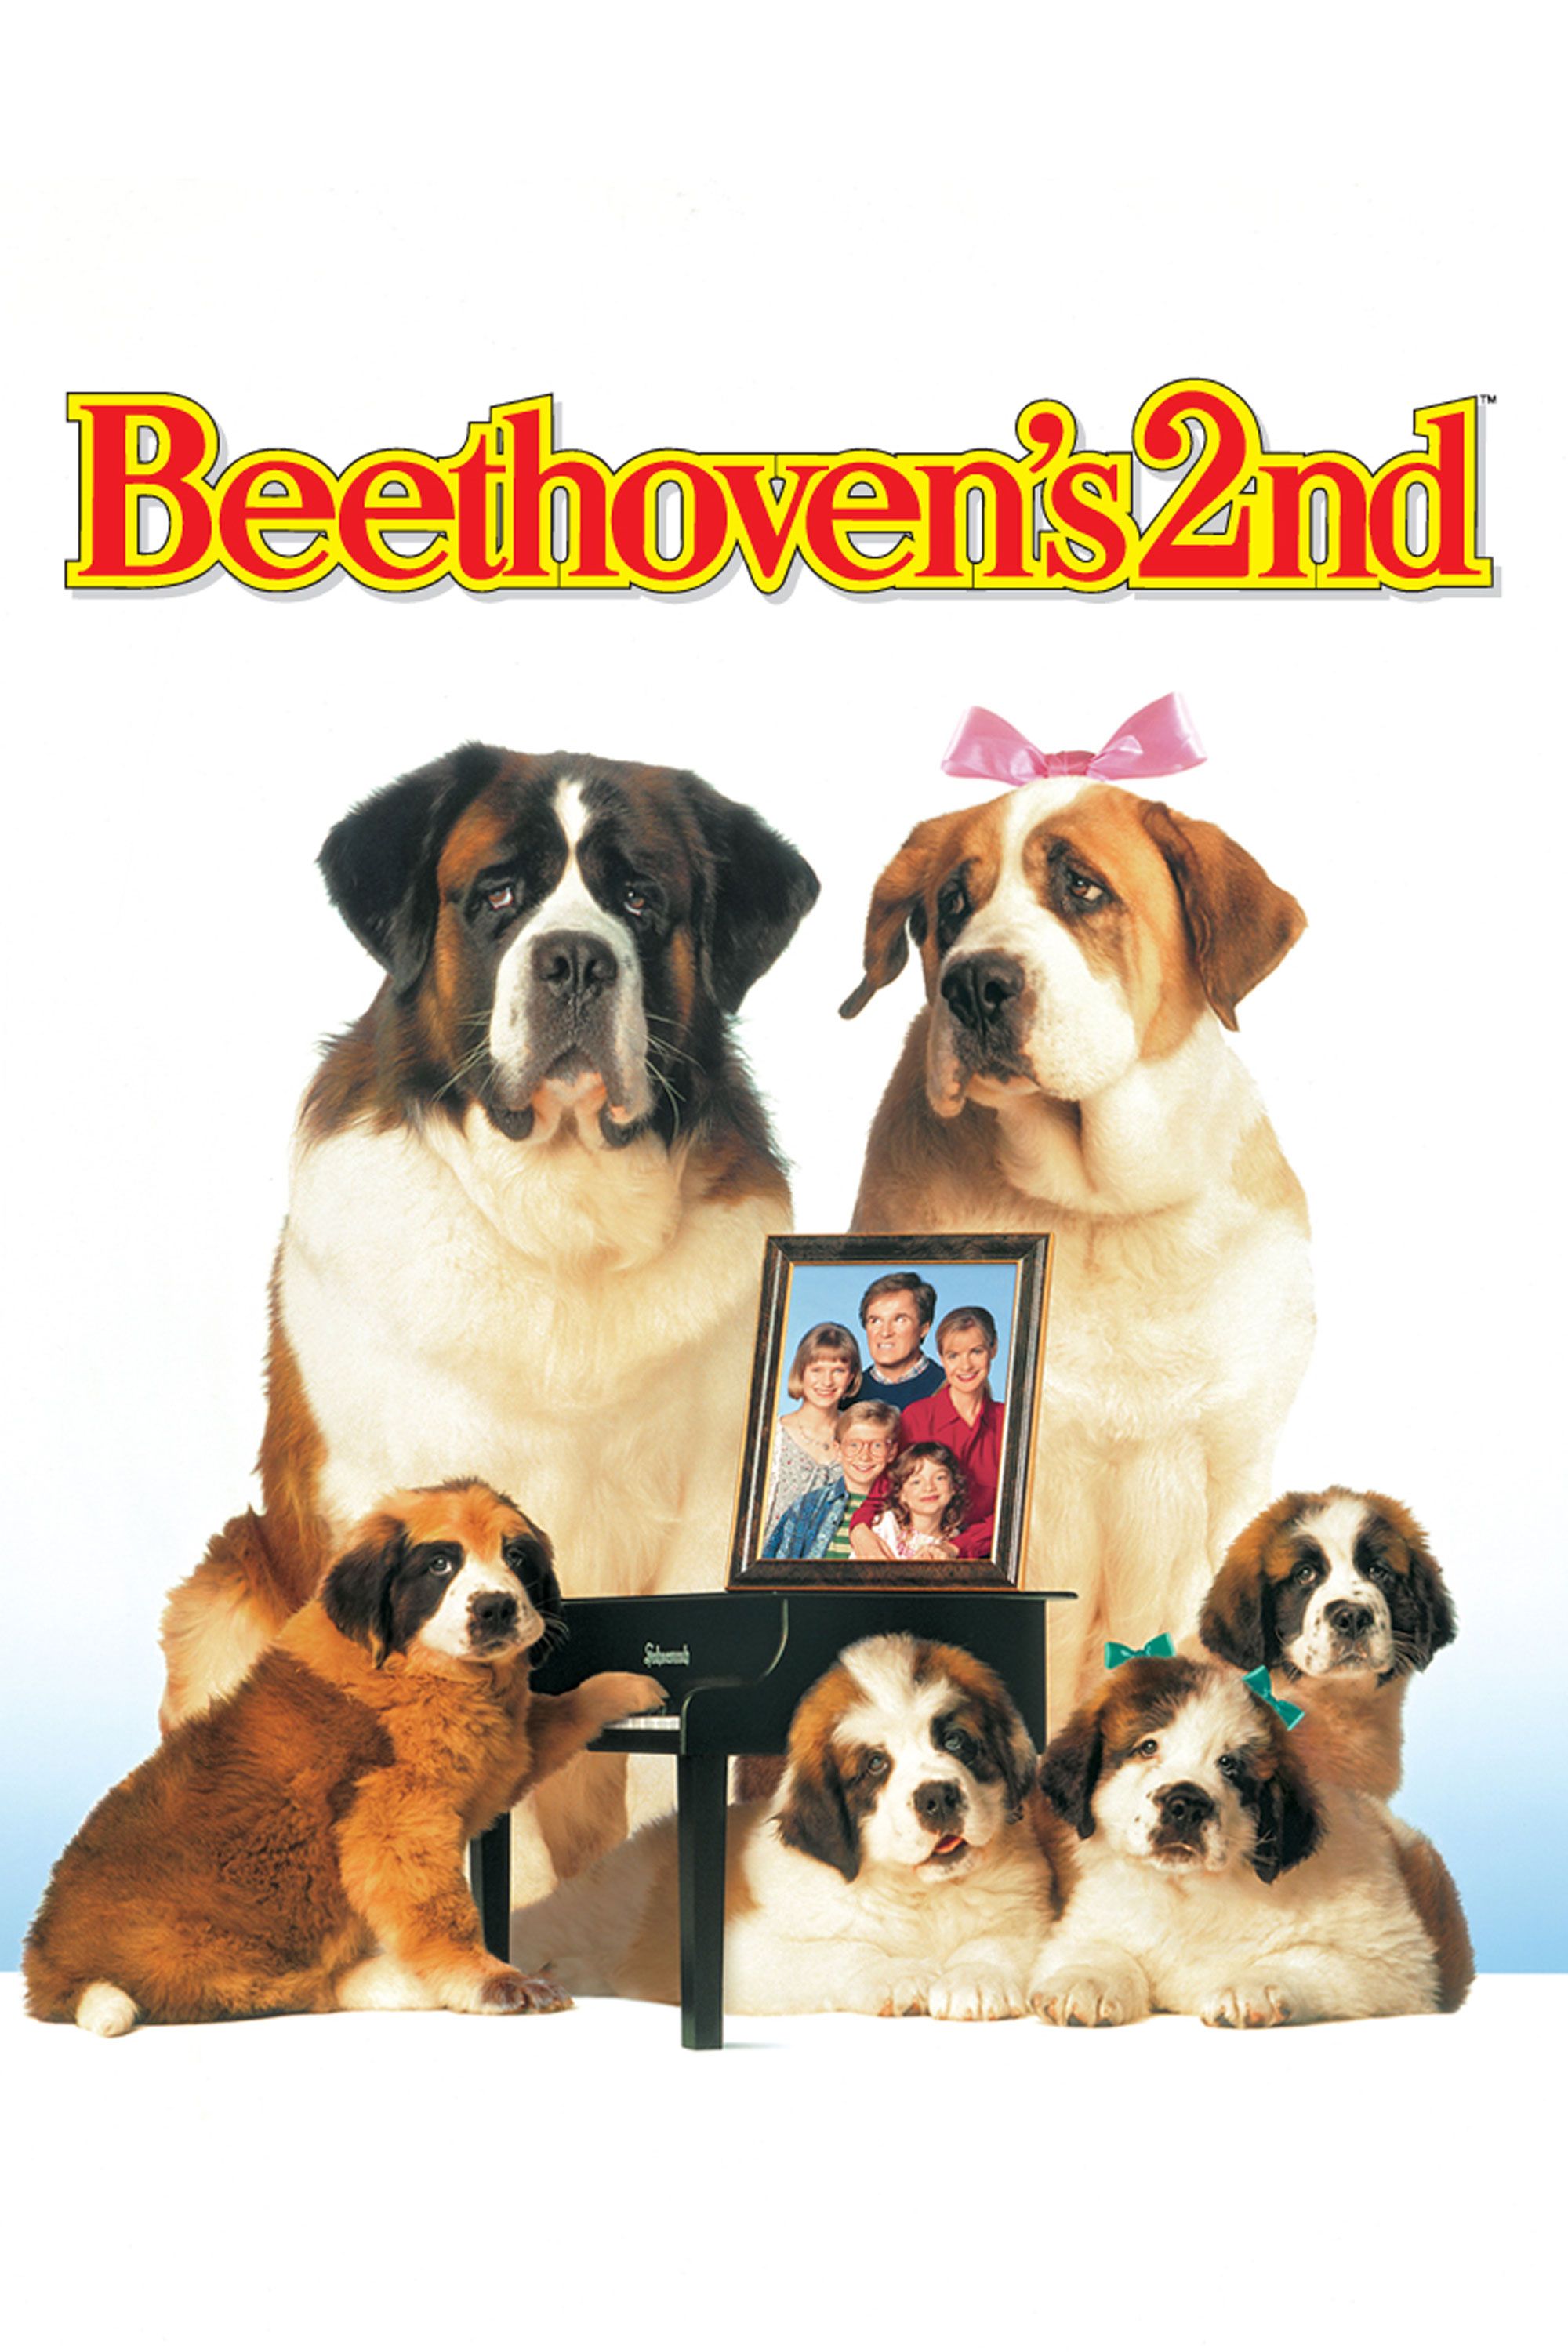 Beethoven movie